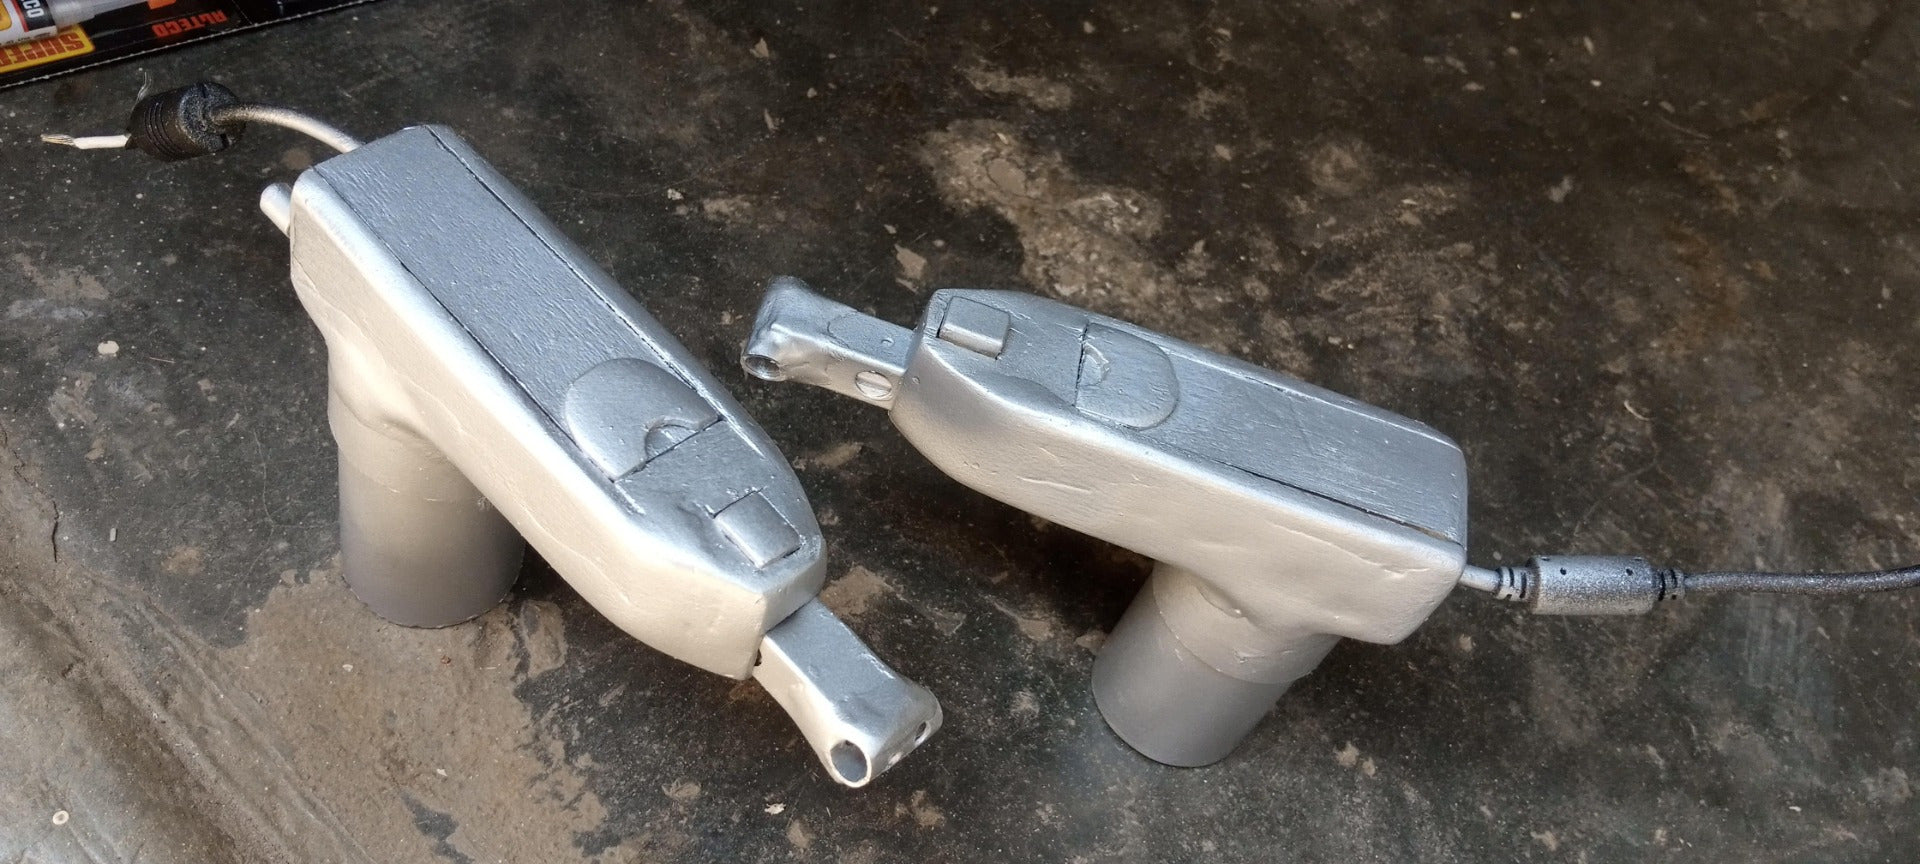 Kasiba Artificial with Foot switch Tool – Kasiba Loc Tools